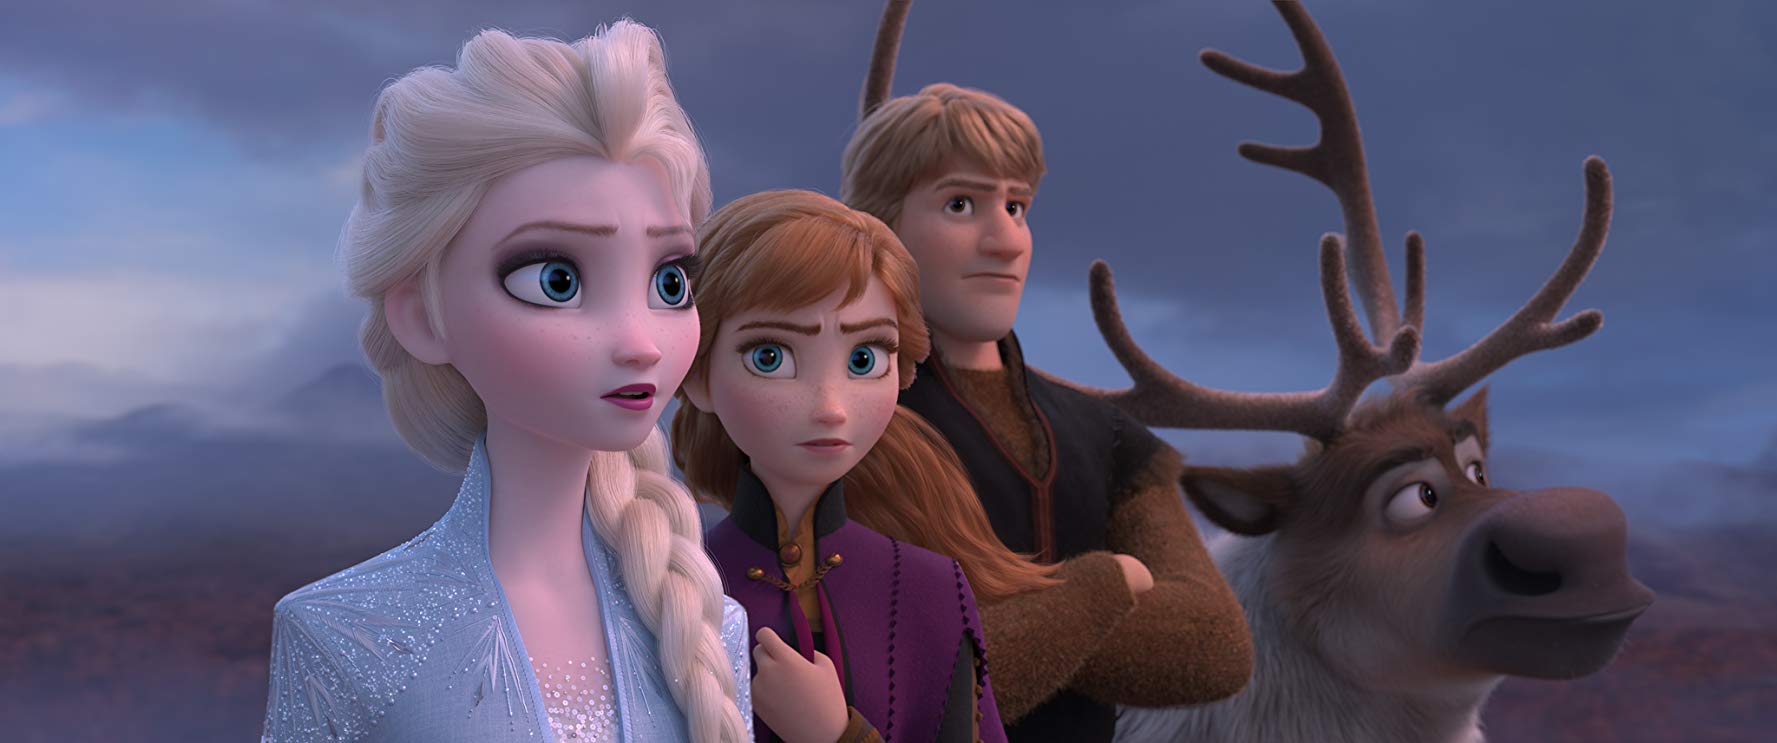 U Dom kulture Kakanj 7. decembra dolazi film “Frozen 2”